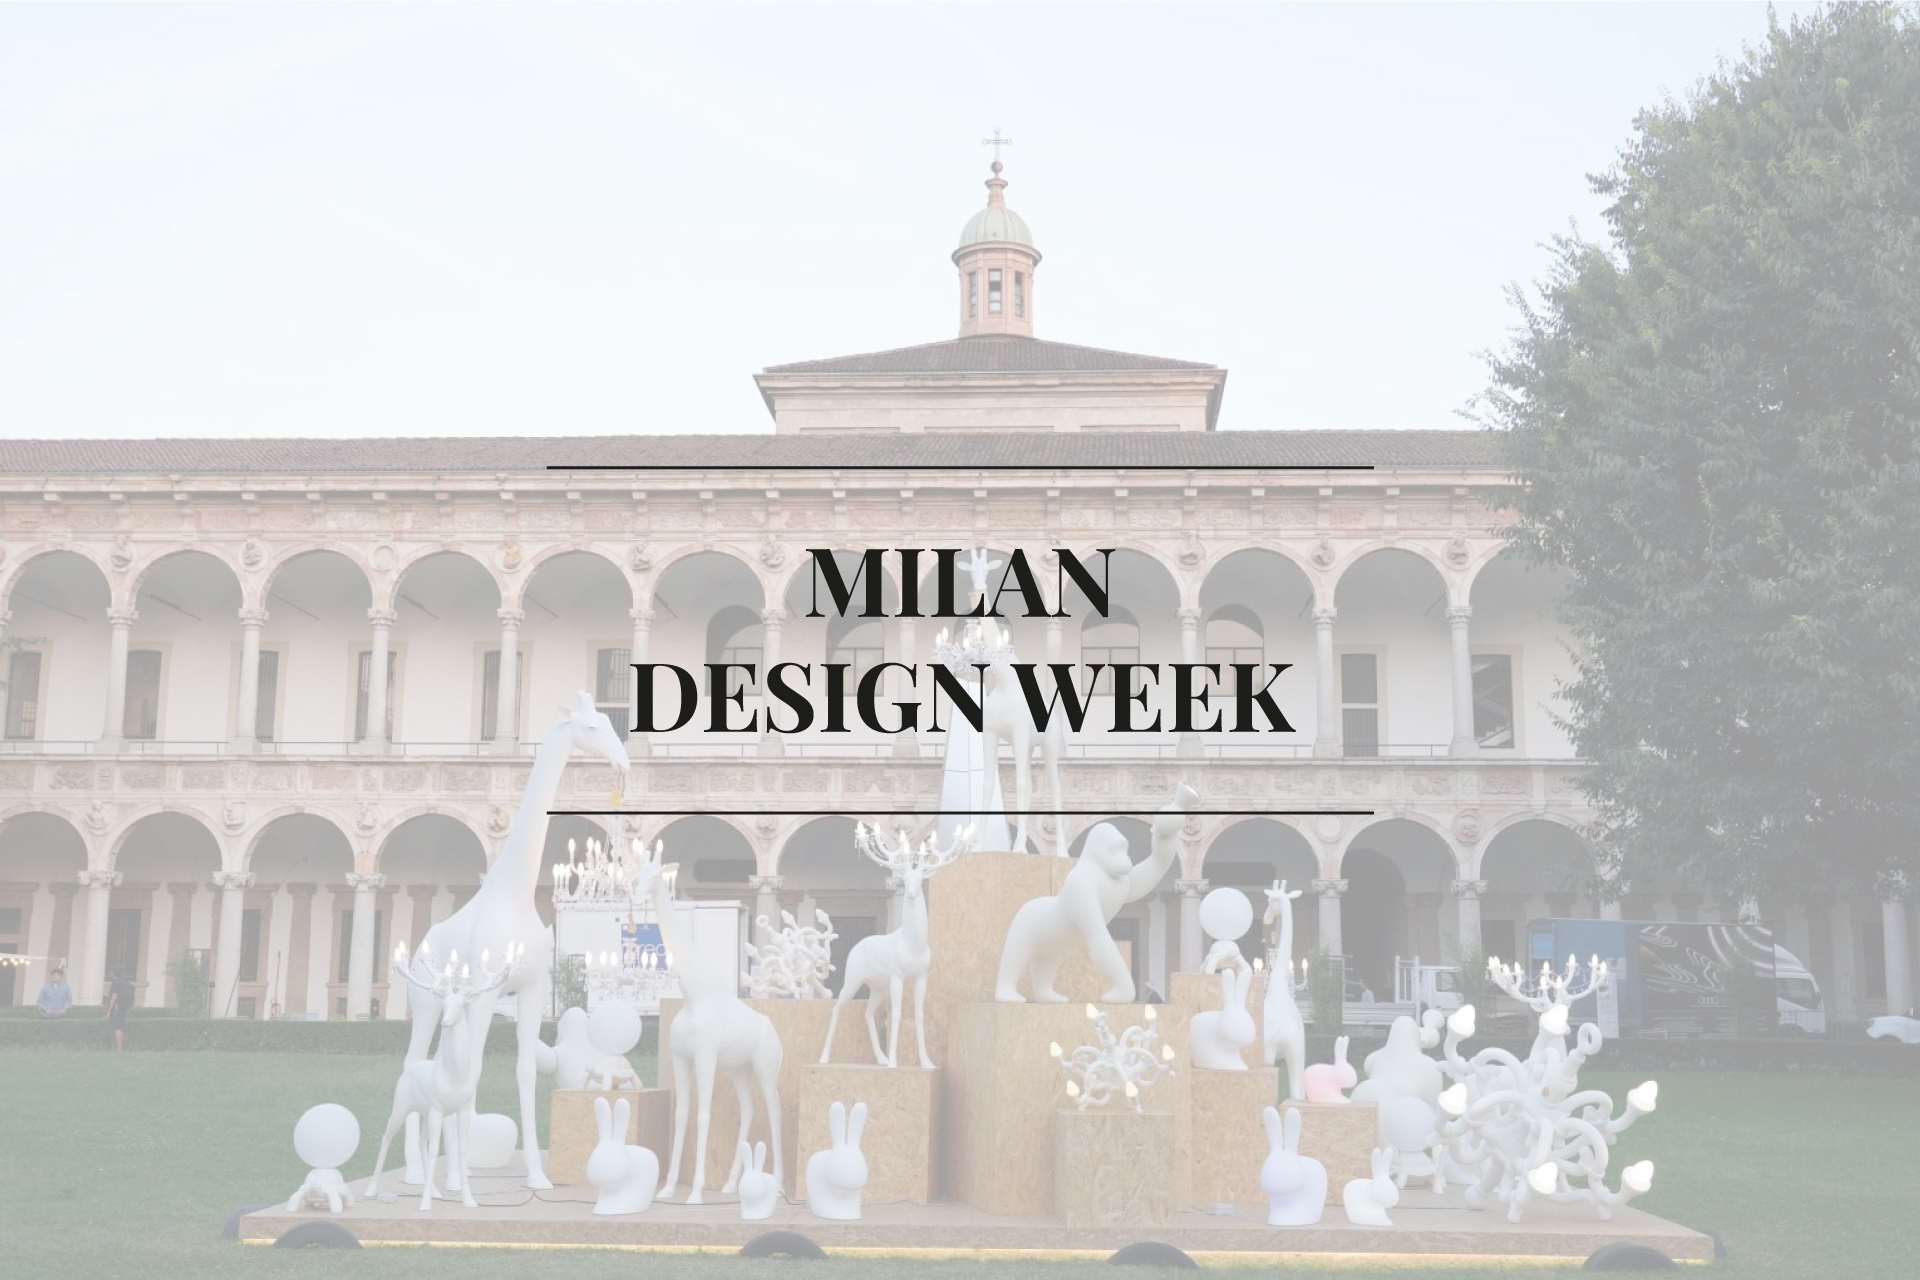 What is going on at Milan Design Week